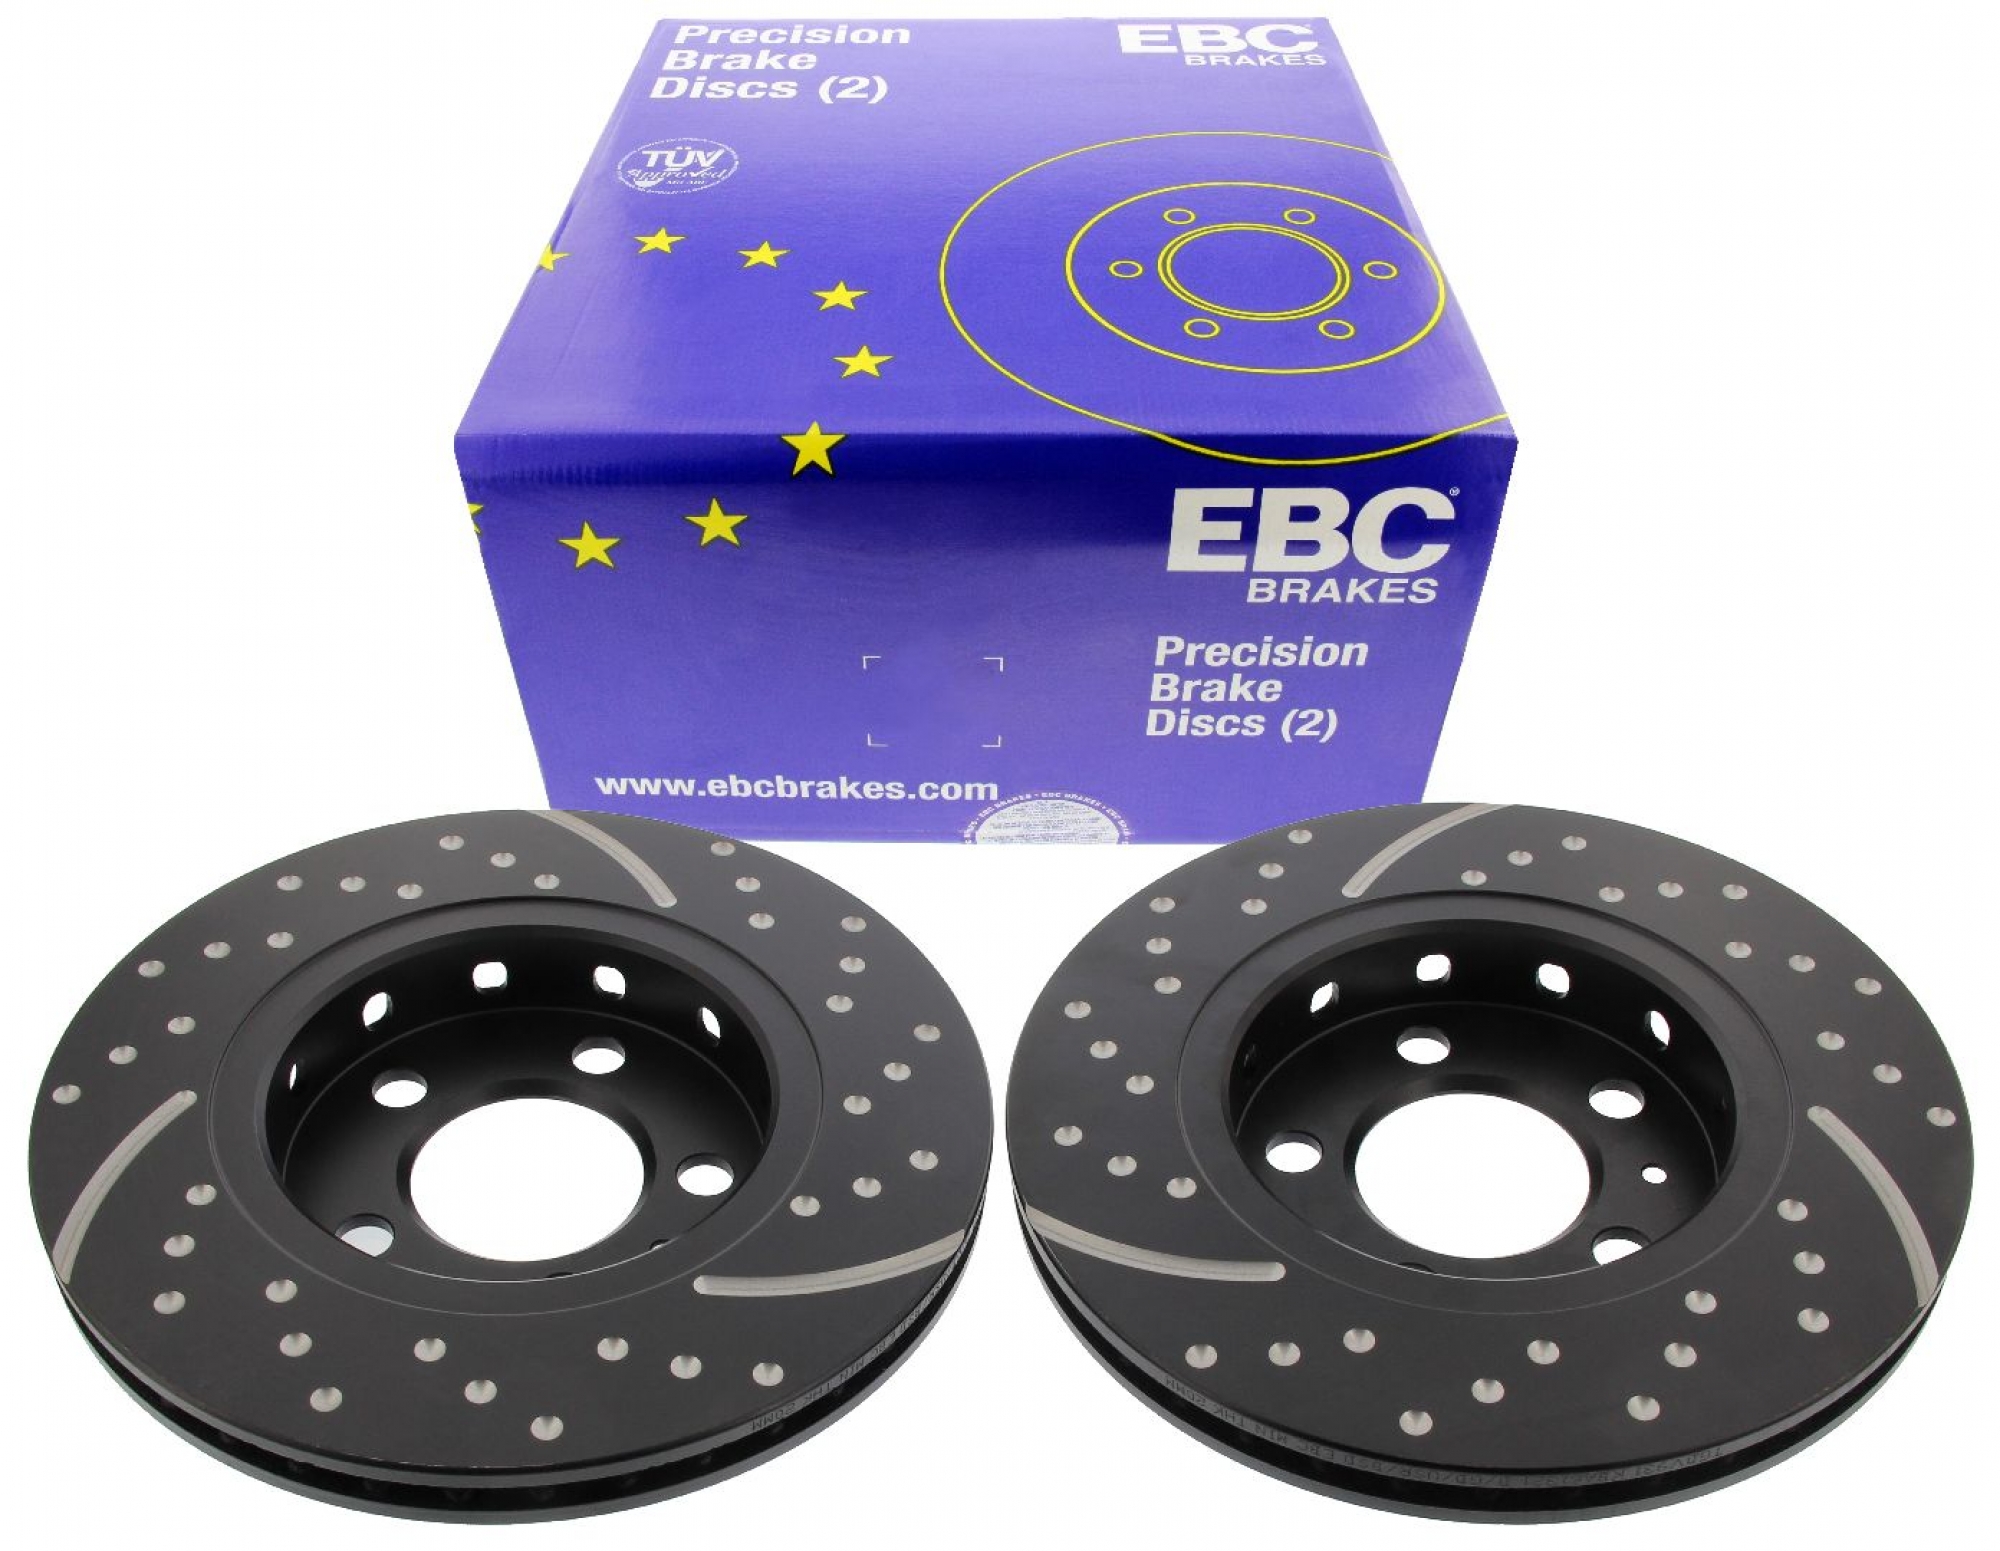 EBC-Bremsscheiben, Turbo Groove Disc Black (2-teilig), HA, VW Golf 4 GTI R32, Ø 256 mm